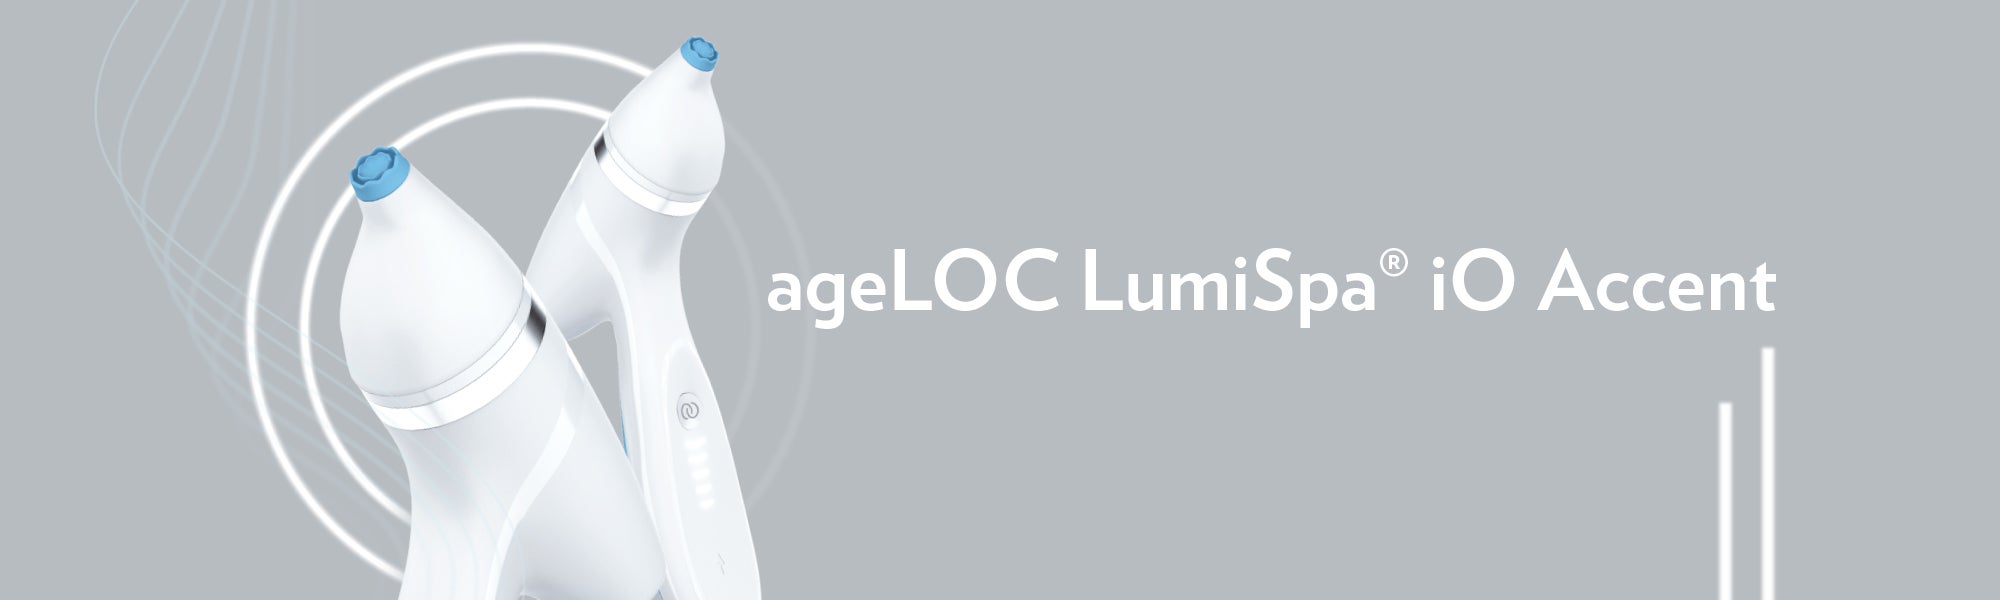 ageLOC LumiSpa® iO Accent Information Page